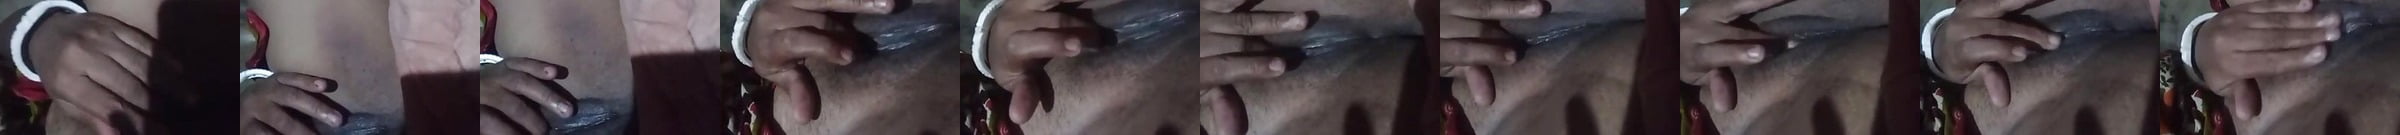 Indian Bhabi Monika Free Nudist Family Tube Porn Video 09 XHamster